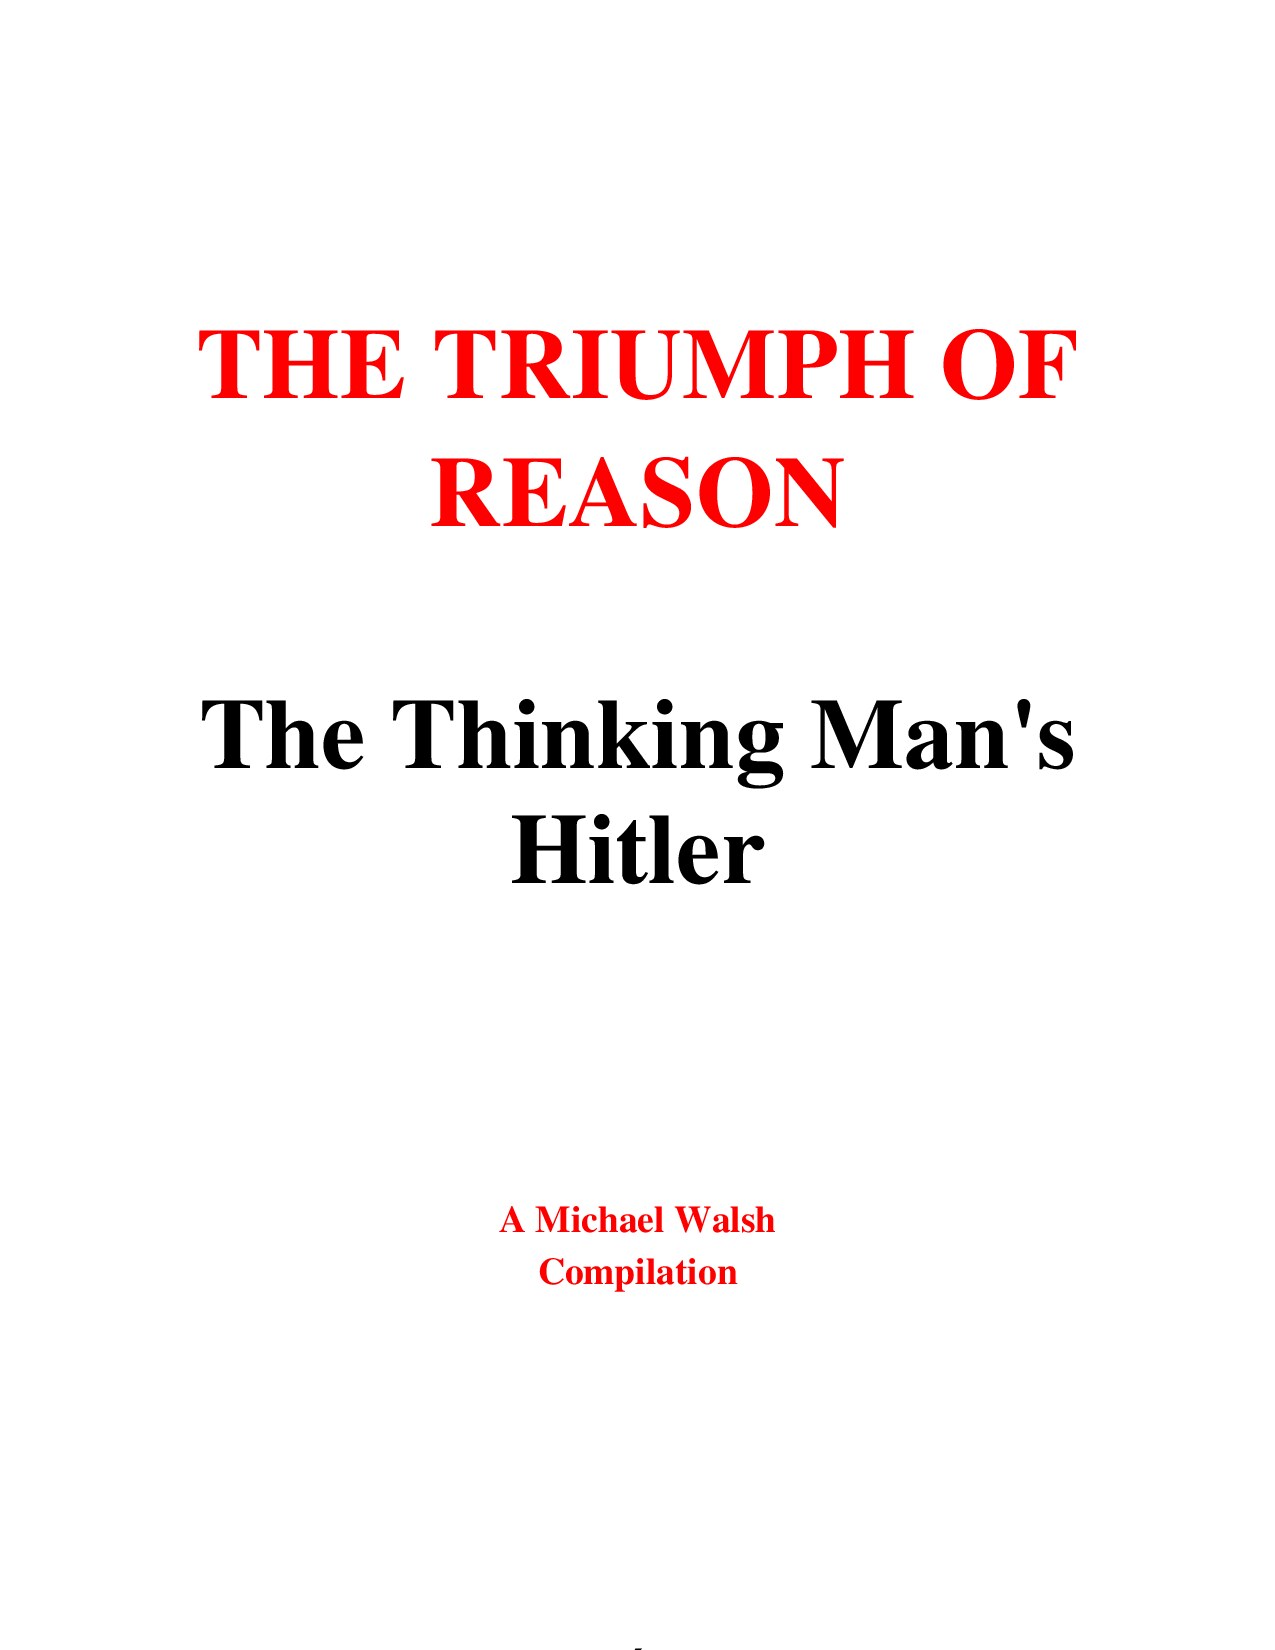 Microsoft Word - The Triumph of Reason.doc